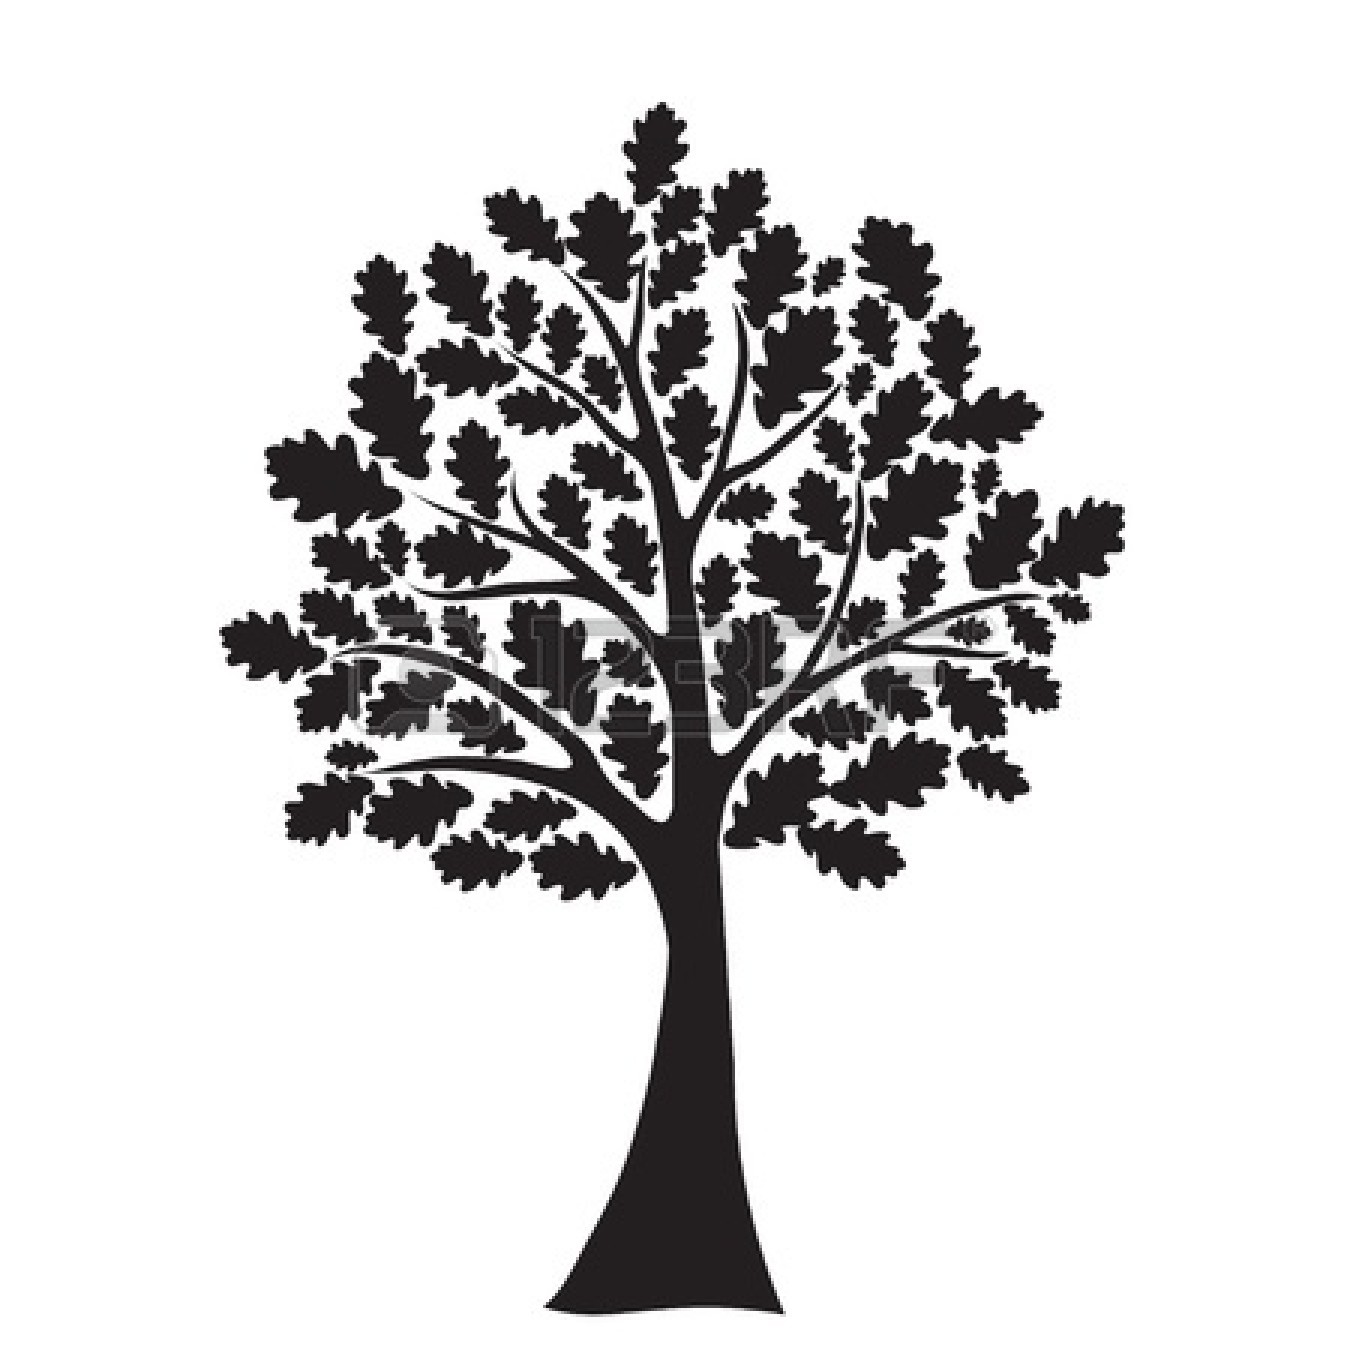 Tree clip art oak tree clipart black and white image - Clip Art Library